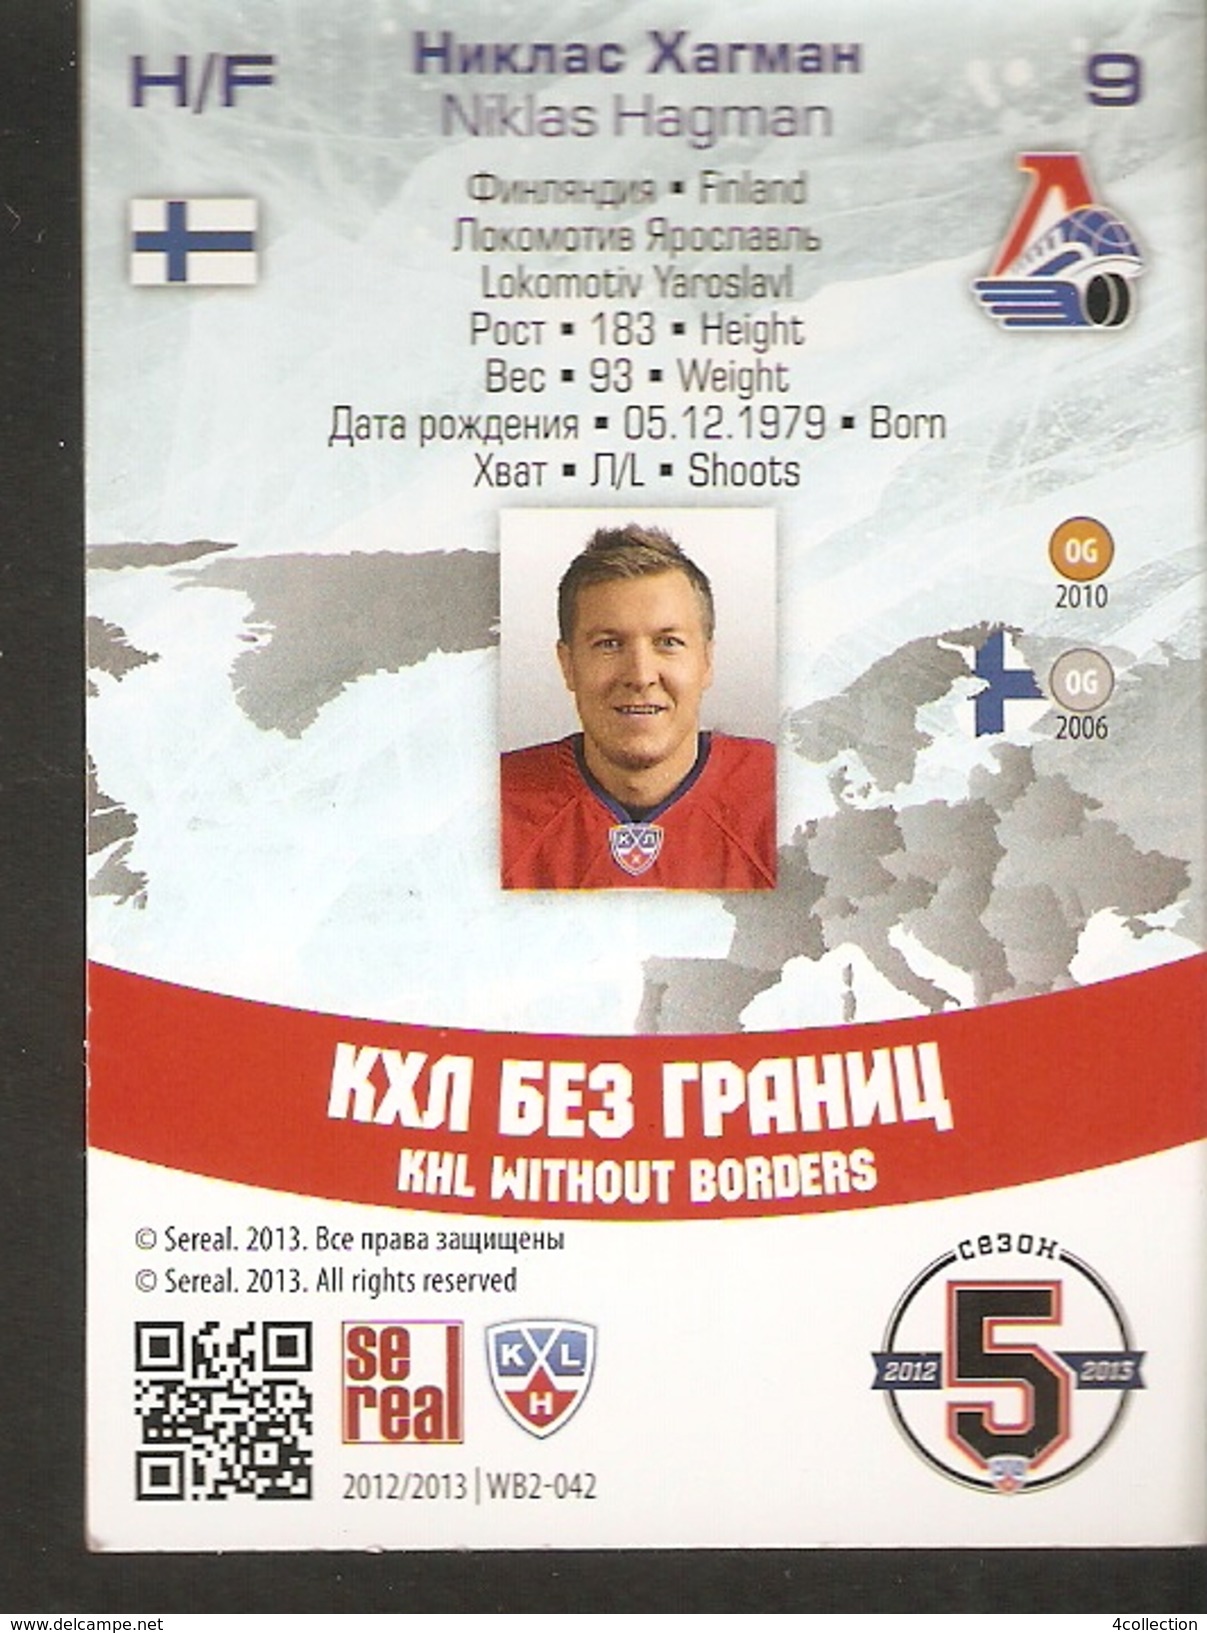 Hockey Sport Collectibles KHL Se Real Card NIKLAS HAGMAN H/F #9 Finland LOKOMOTIV Yaroslavl 5th Season 2012-2013 - 2000-Oggi